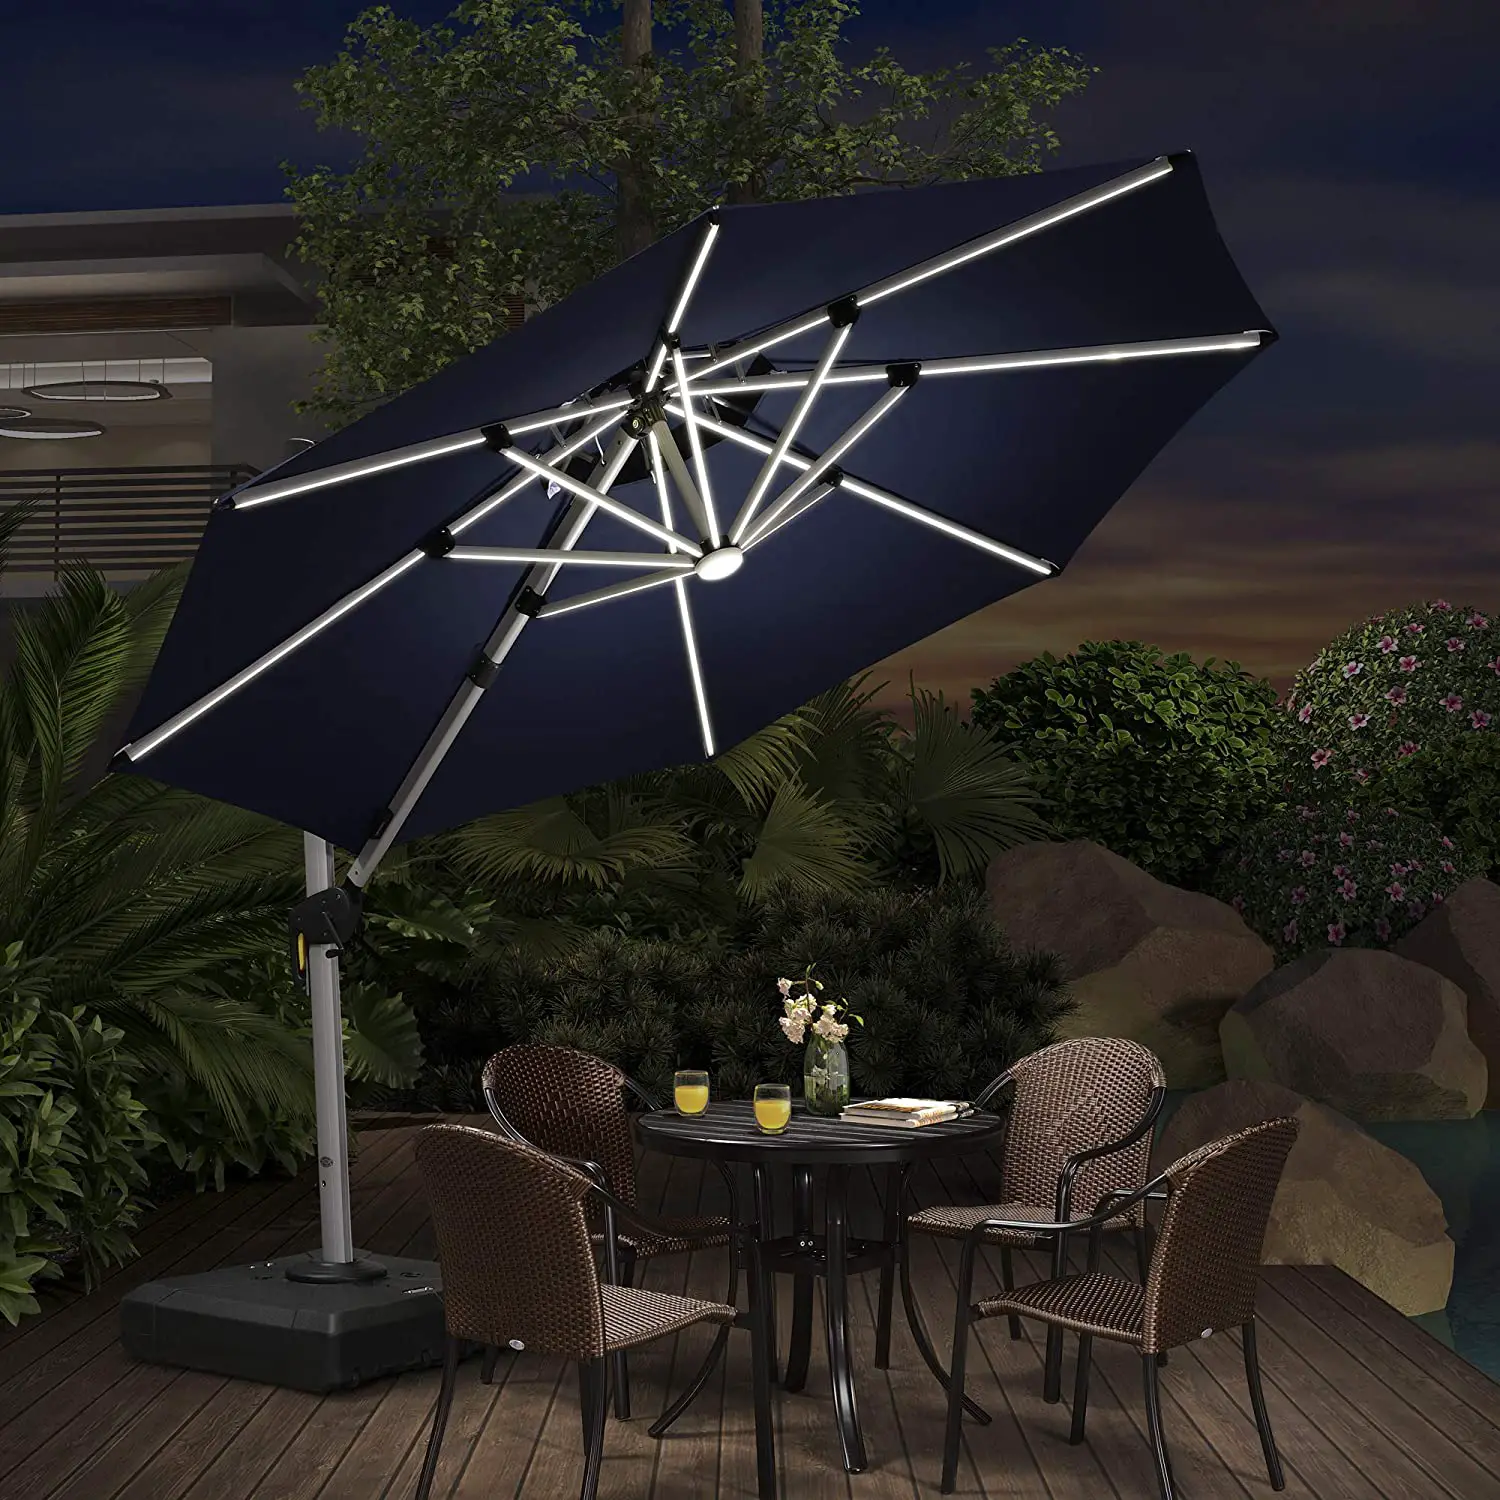 Amazon.com : PURPLE LEAF 10ft Solar Powered LED Patio Umbrella Outdoor ...